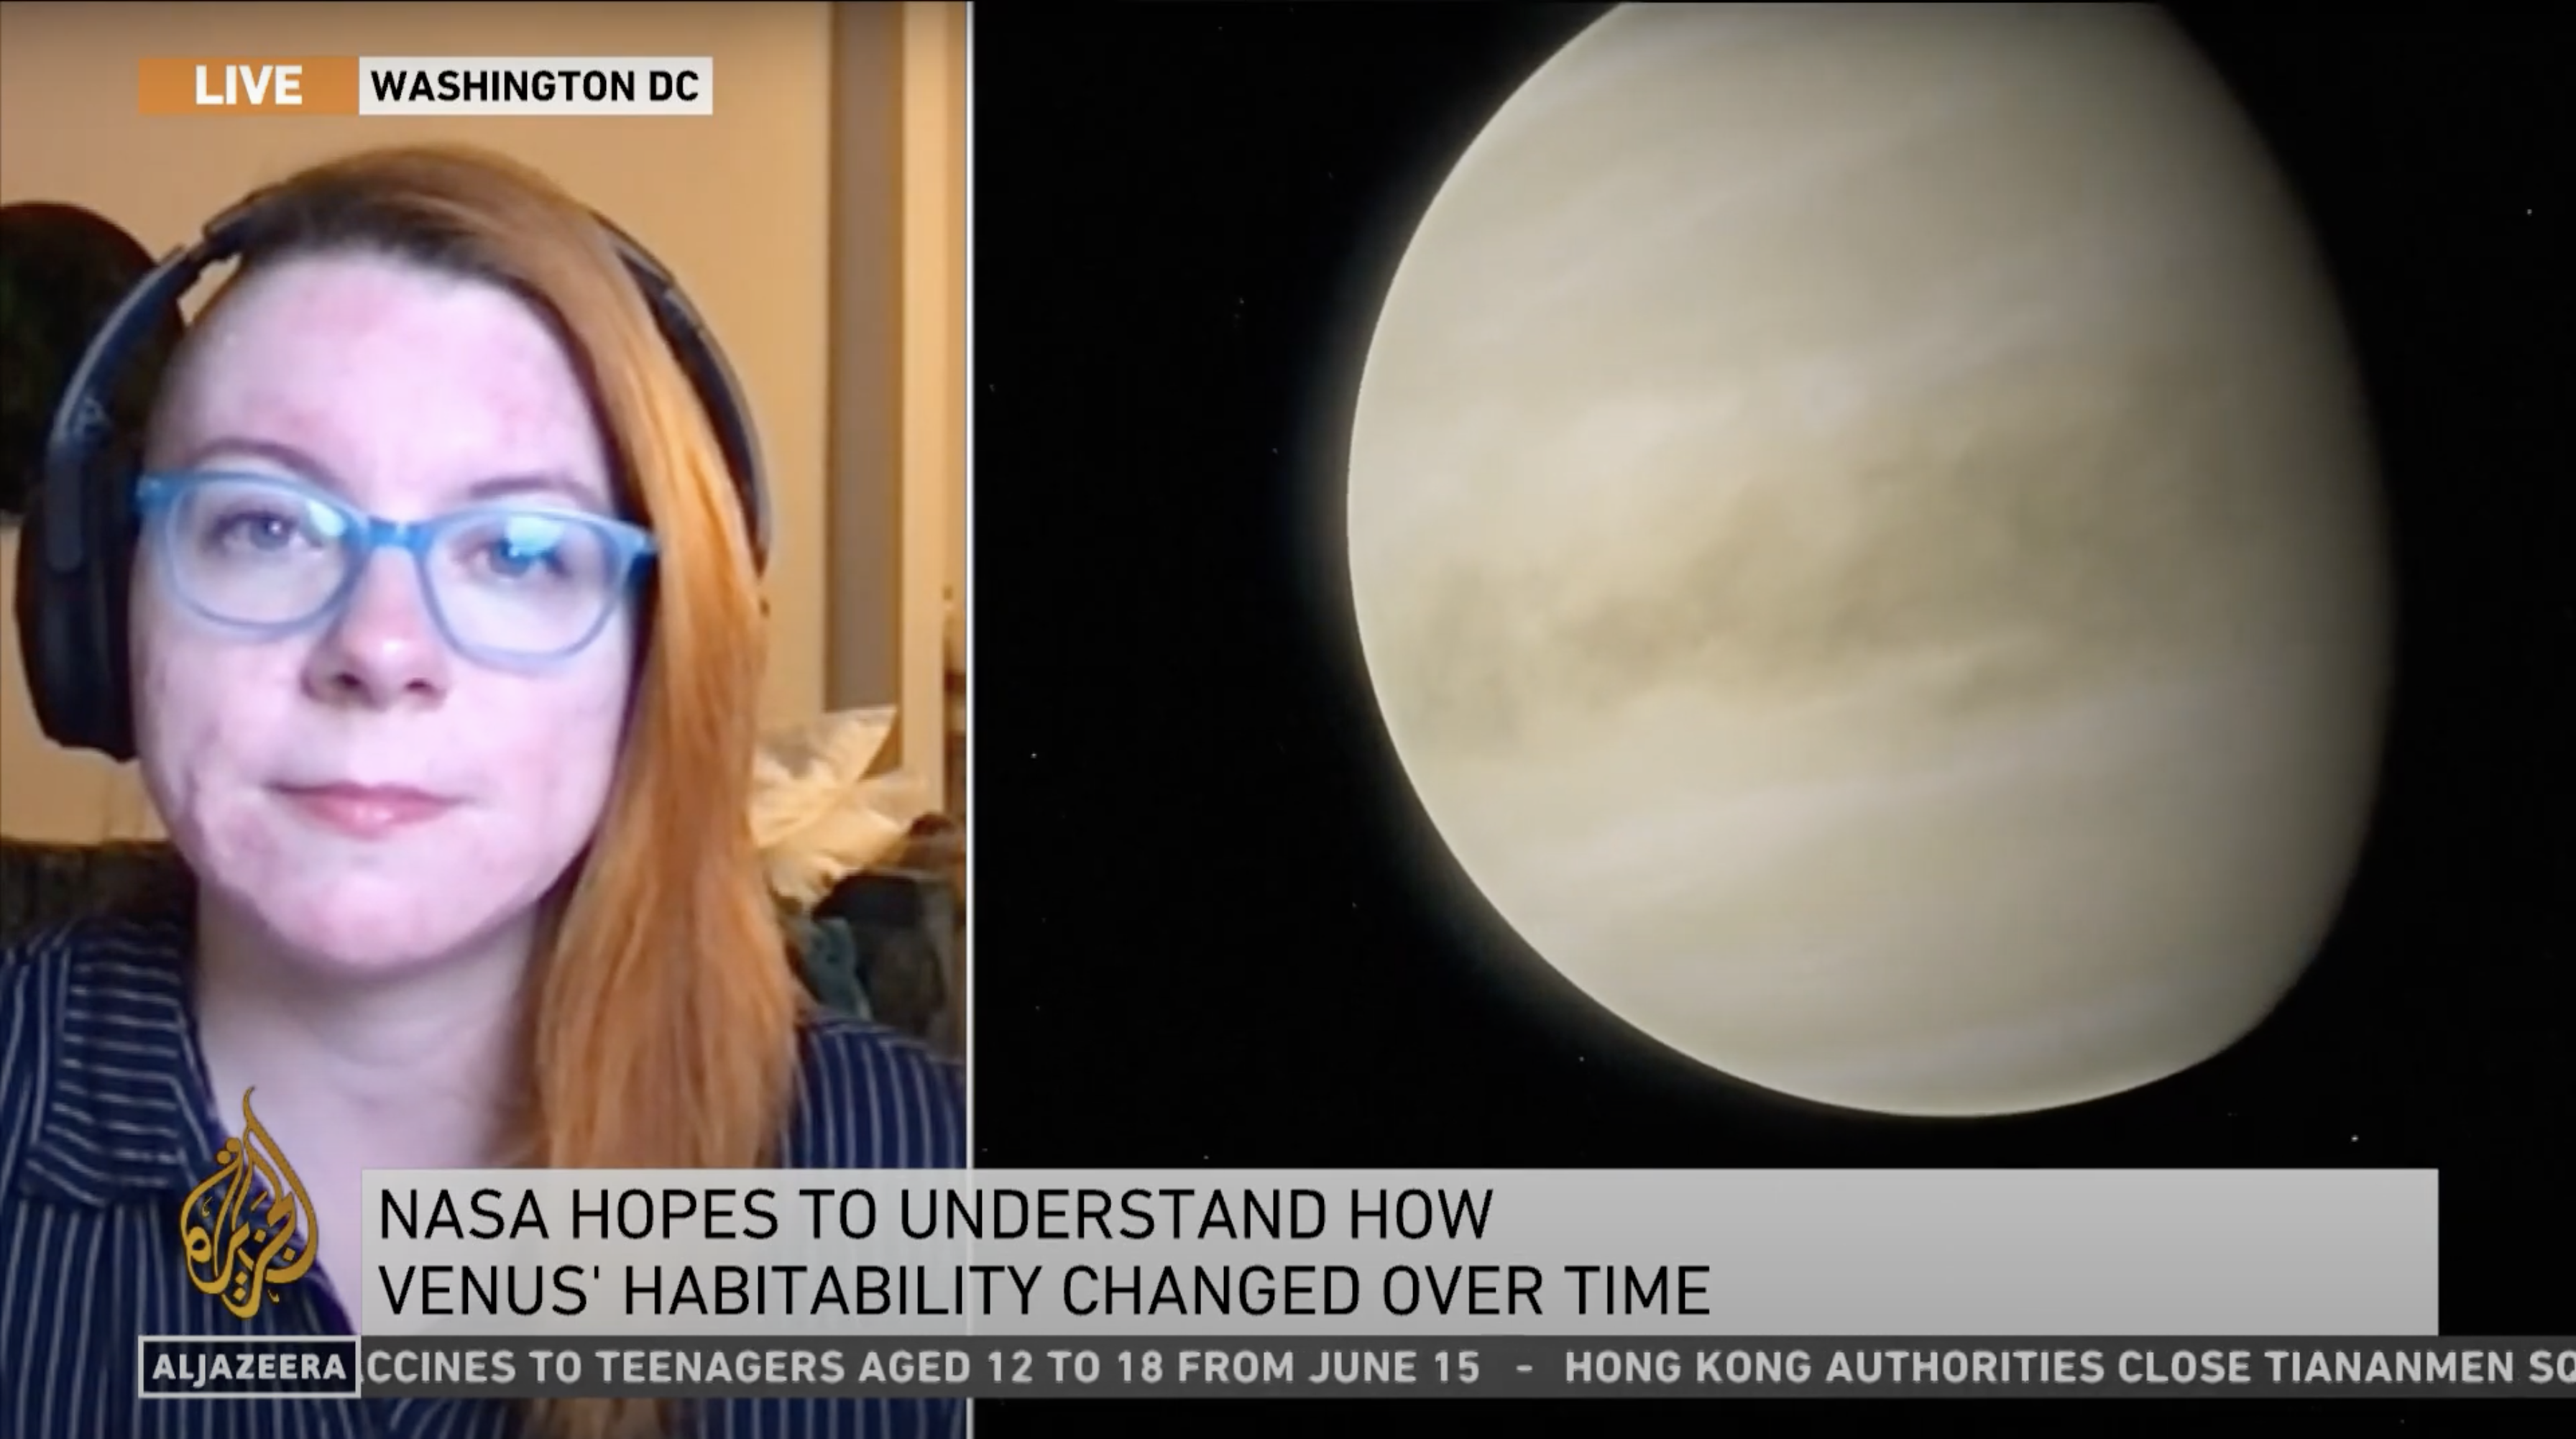 Tanya on Al Jazeera talking about the DAVINCI and VERITAS missions to Venus